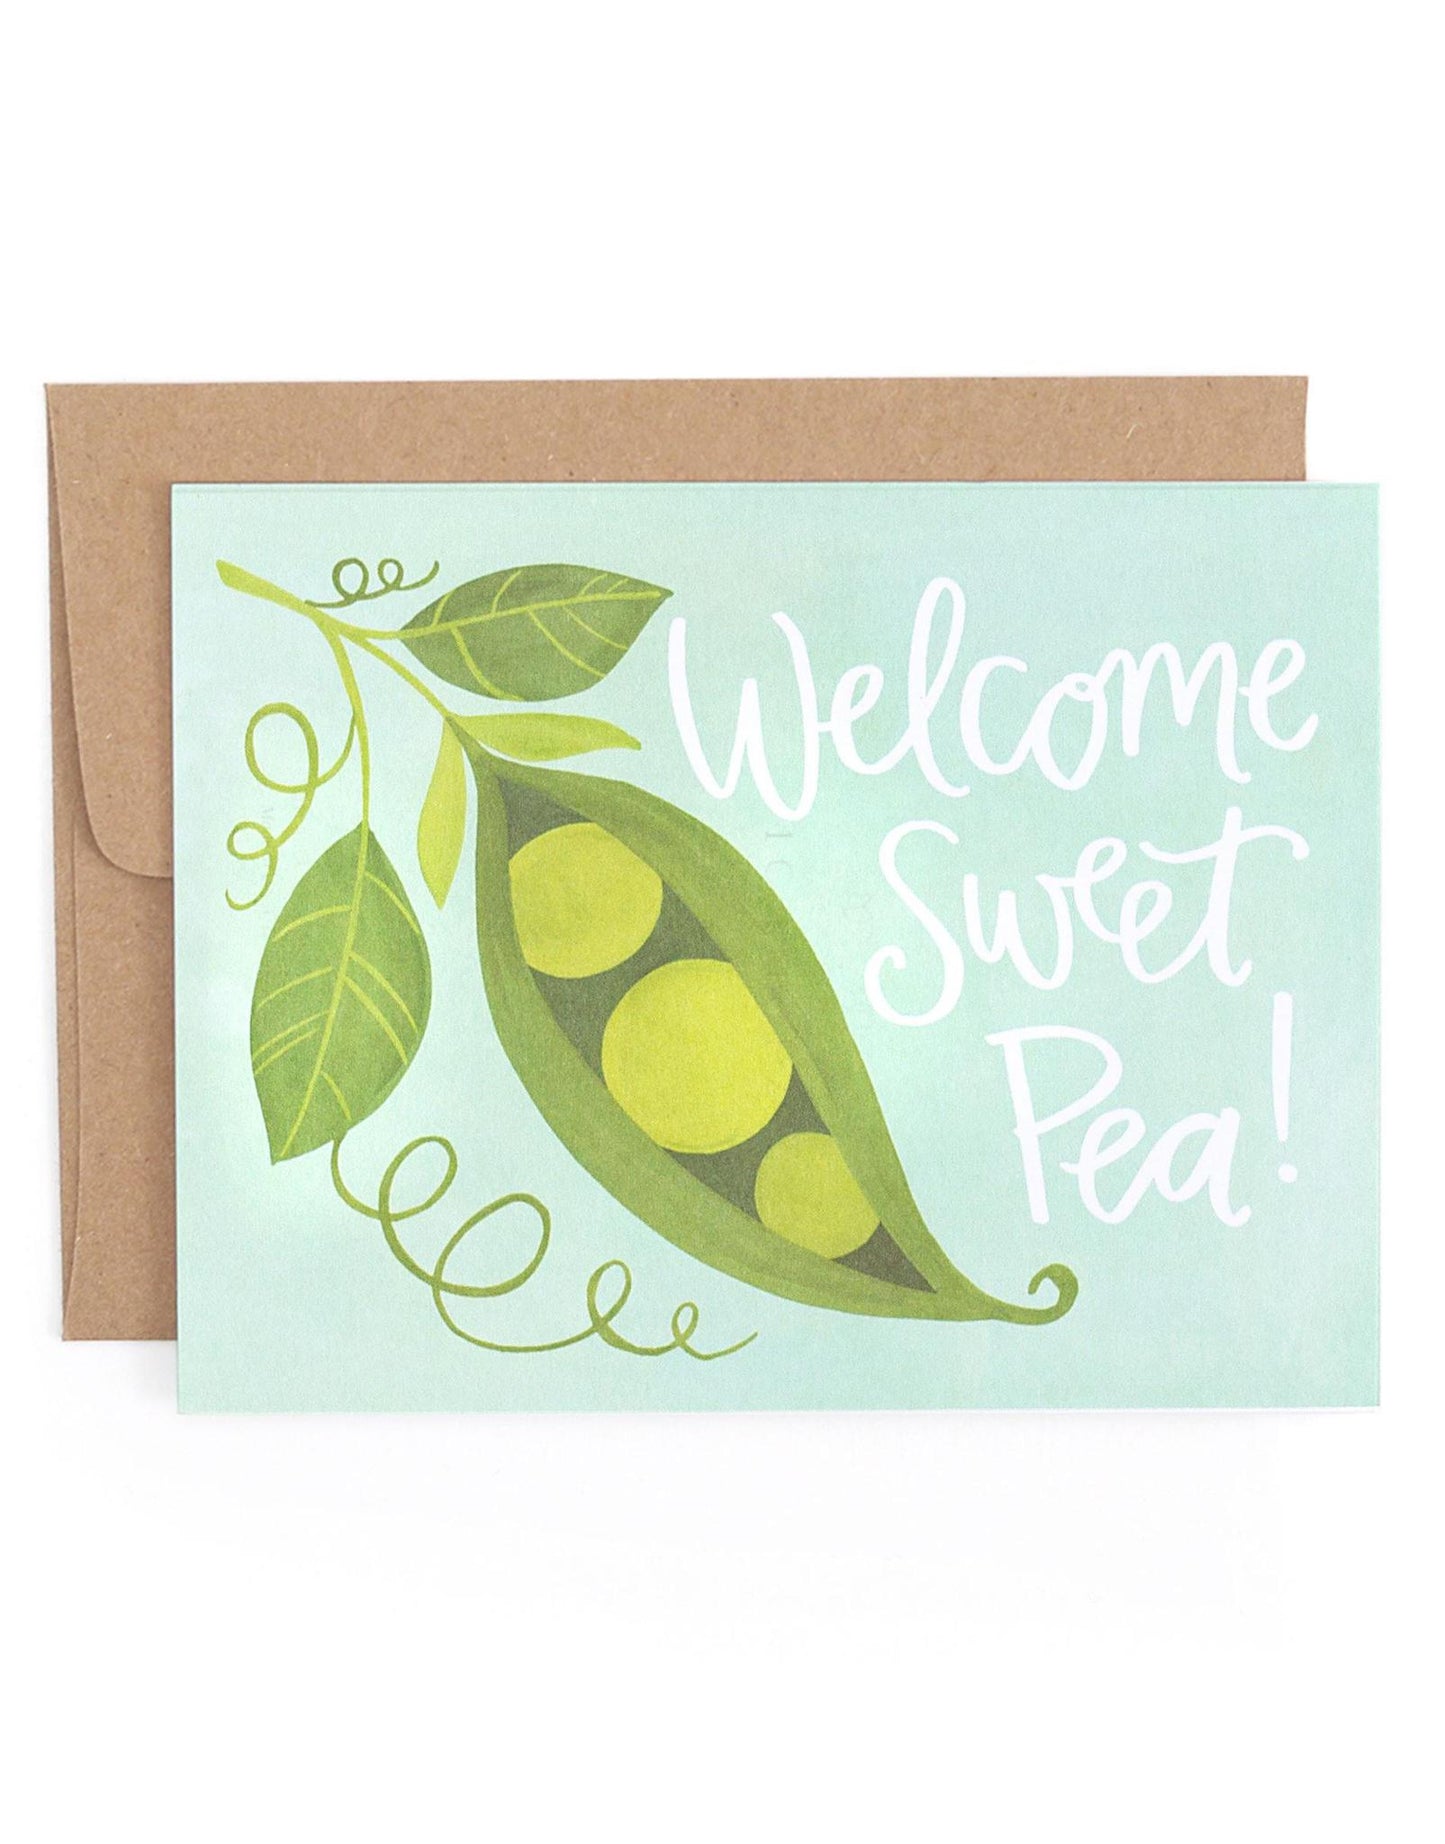 Sweet Pea Card